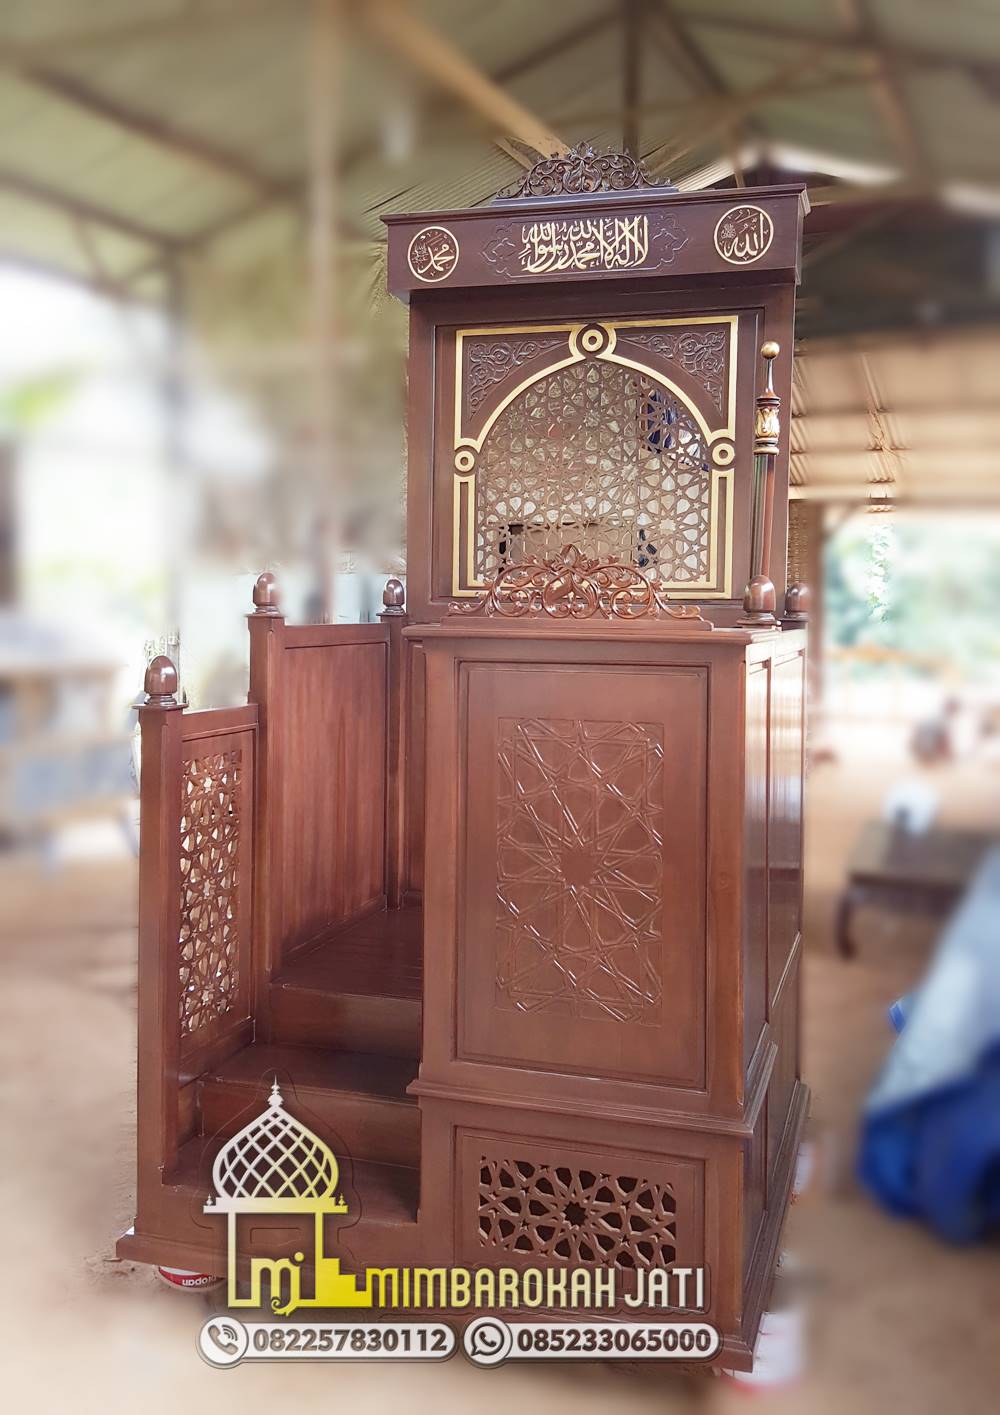 Mimbar Podium Masjid Minimalis Terbaru